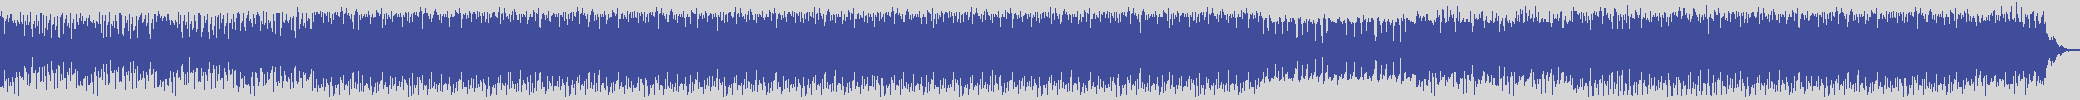 nf_boyz_records [NFY033] Mistral - The Deep Door [House Rhythms Mix] audio wave form